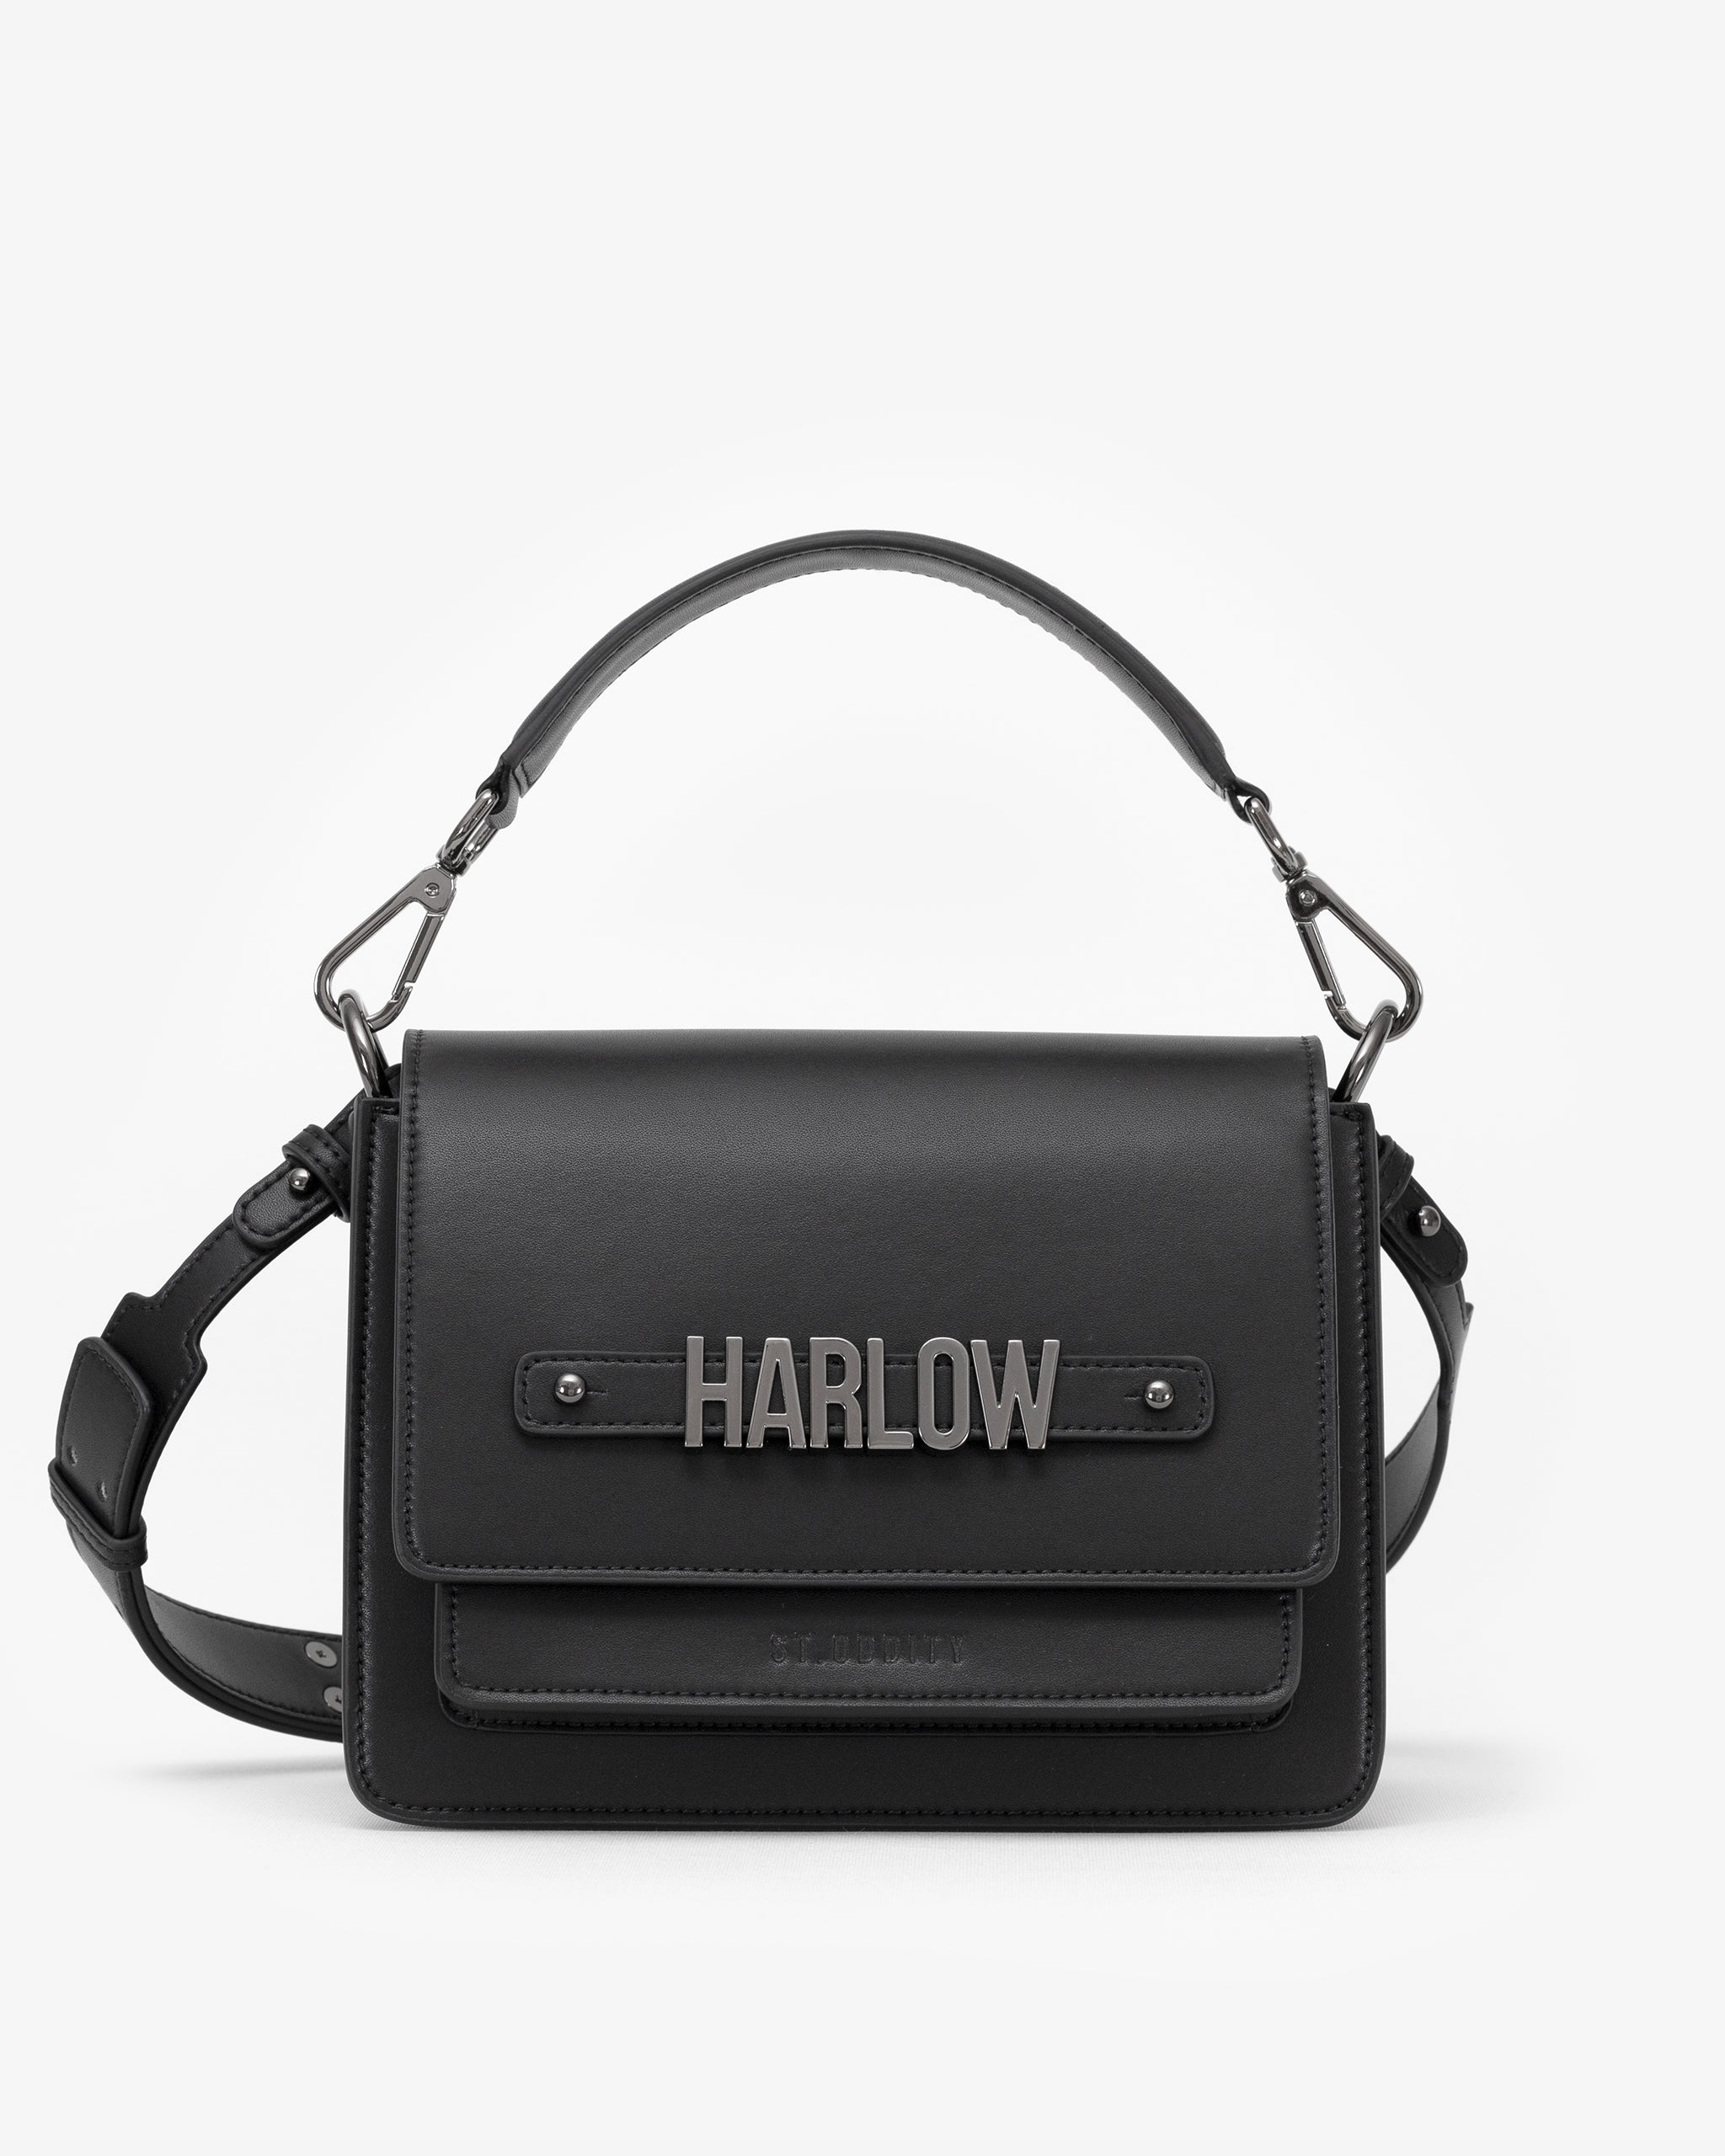 Shoulder Bag in Black/Gunmetal with Personalised Hardware